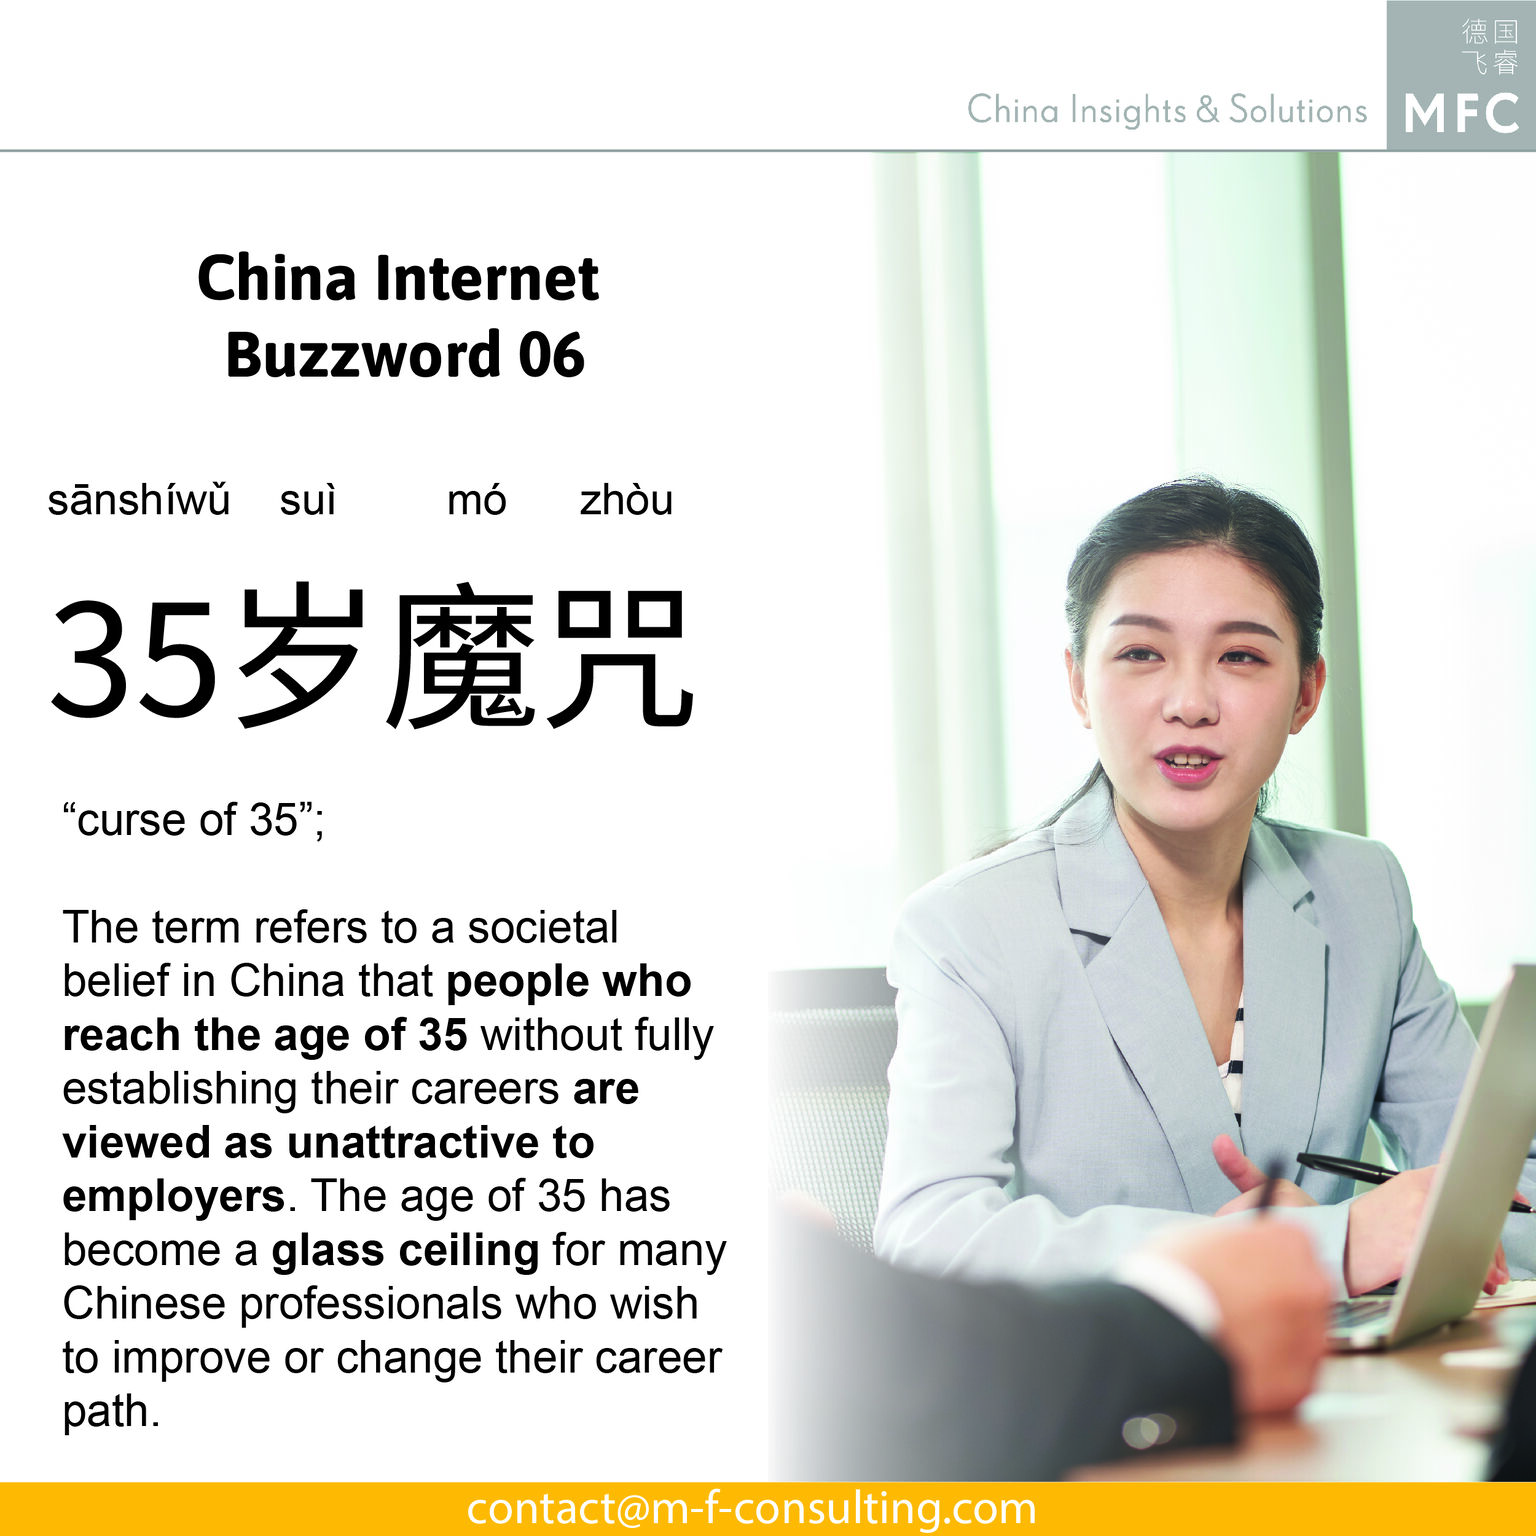 China Internet Buzzword: curse of 35